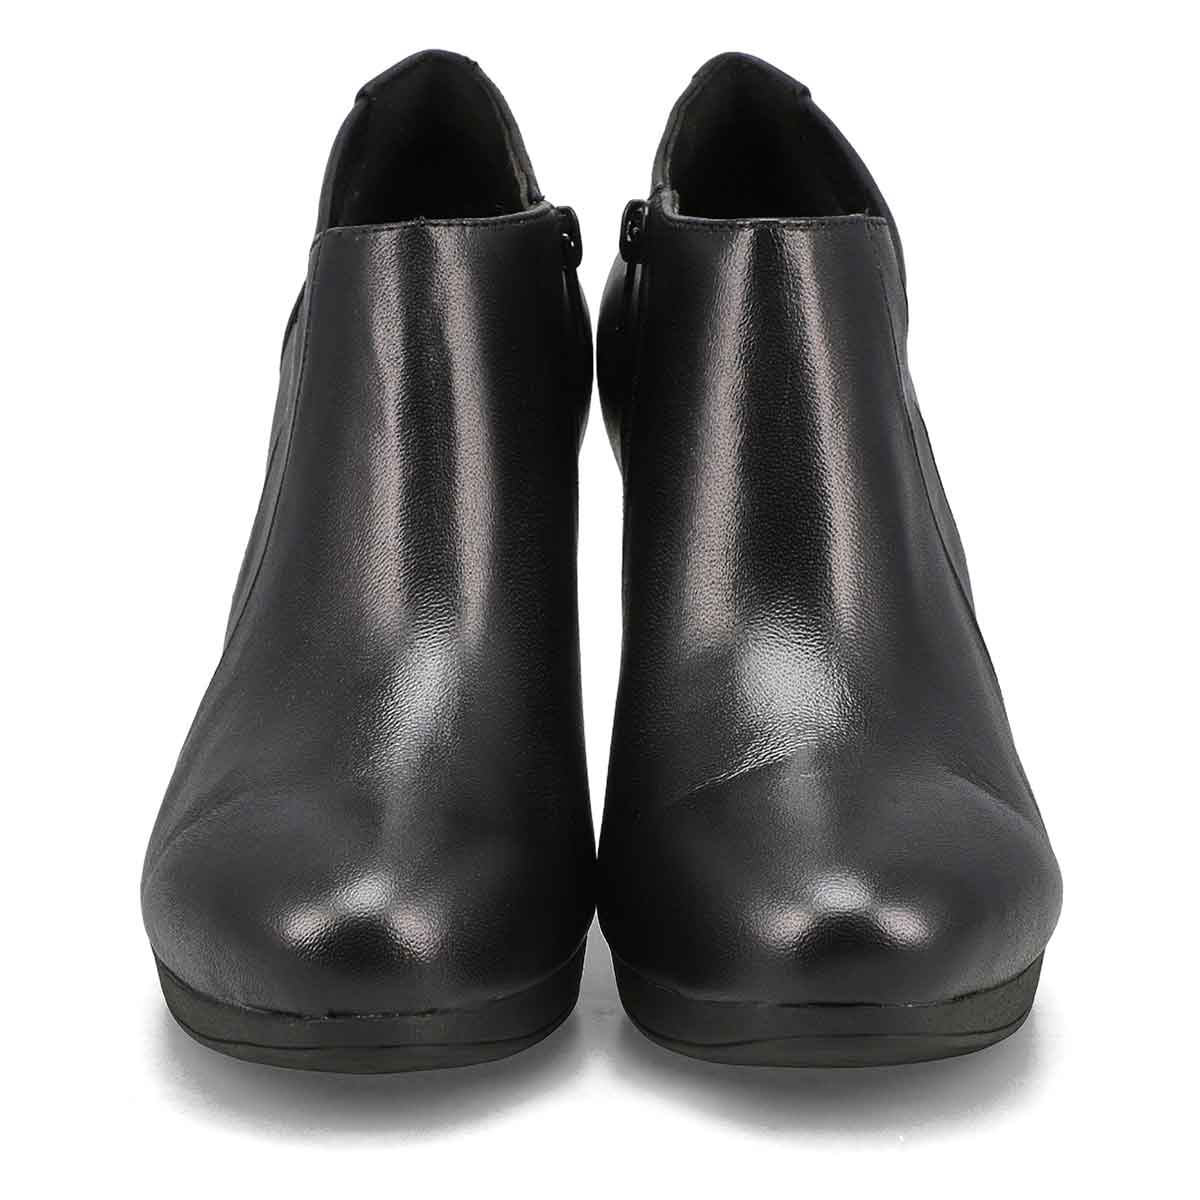 Clarks Women's Ambyr Hope Dress Heel - Black | SoftMoc.com